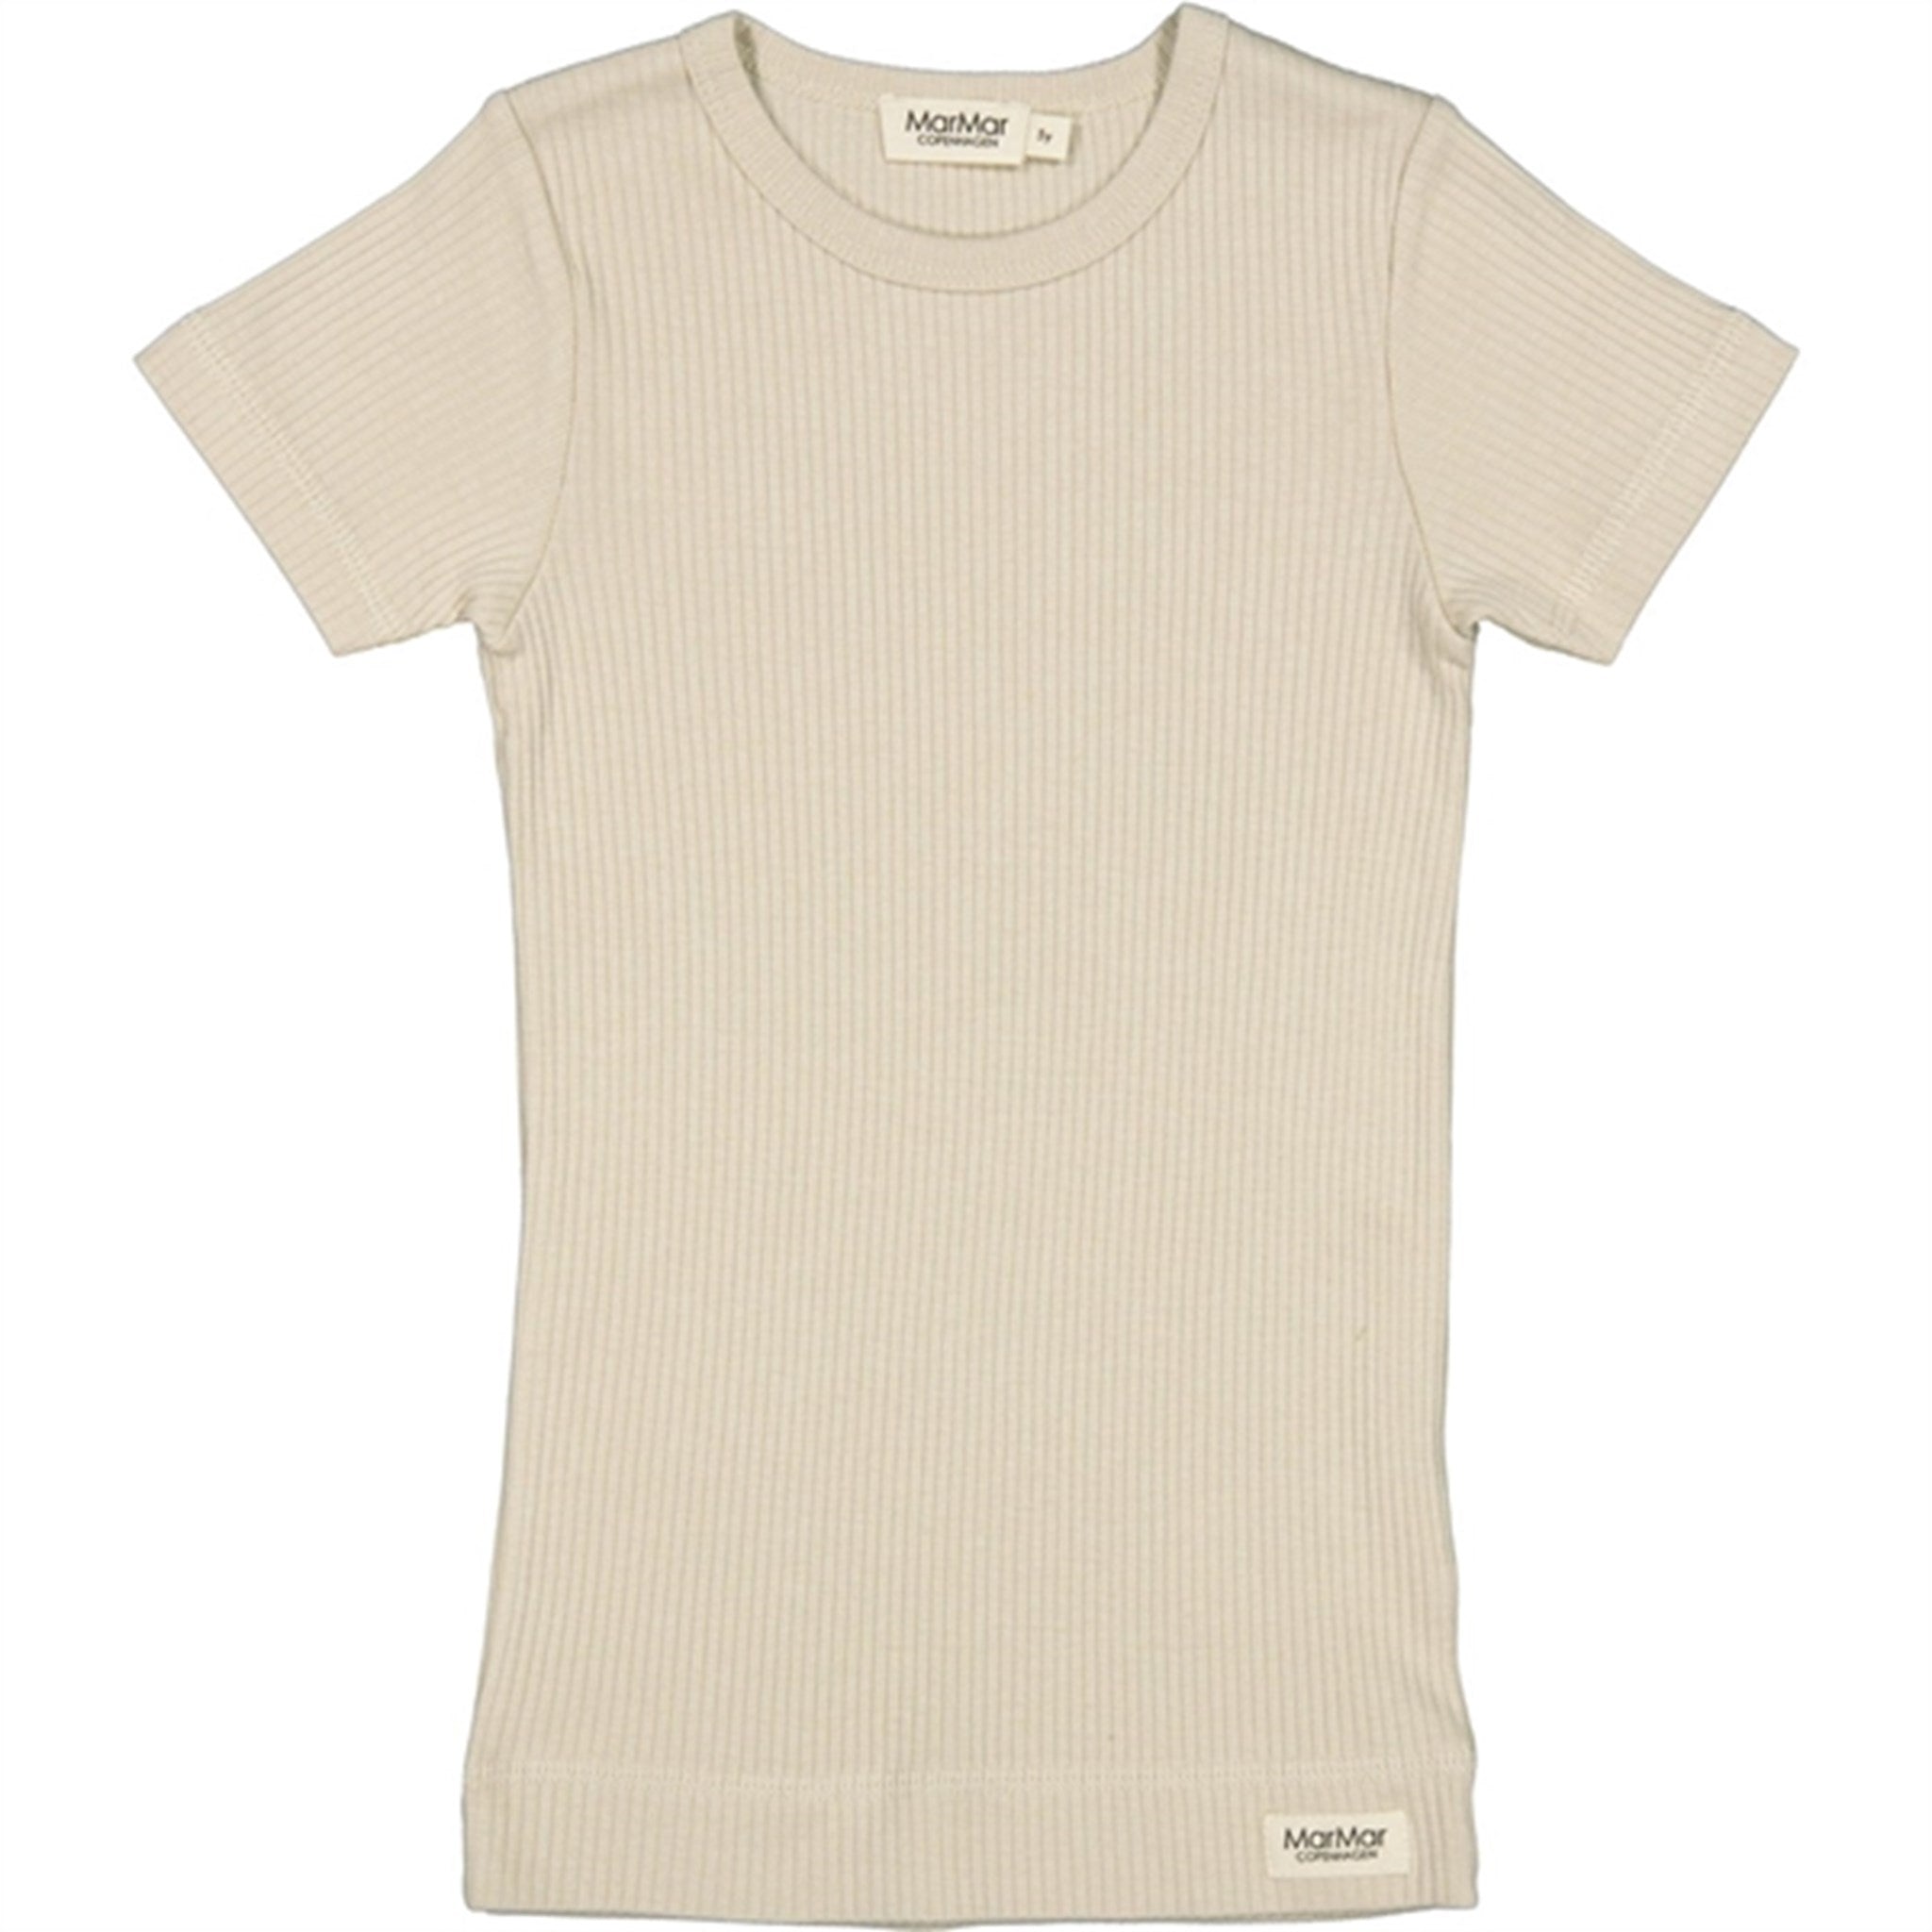 MarMar Modal Grey Sand T-shirt Plain